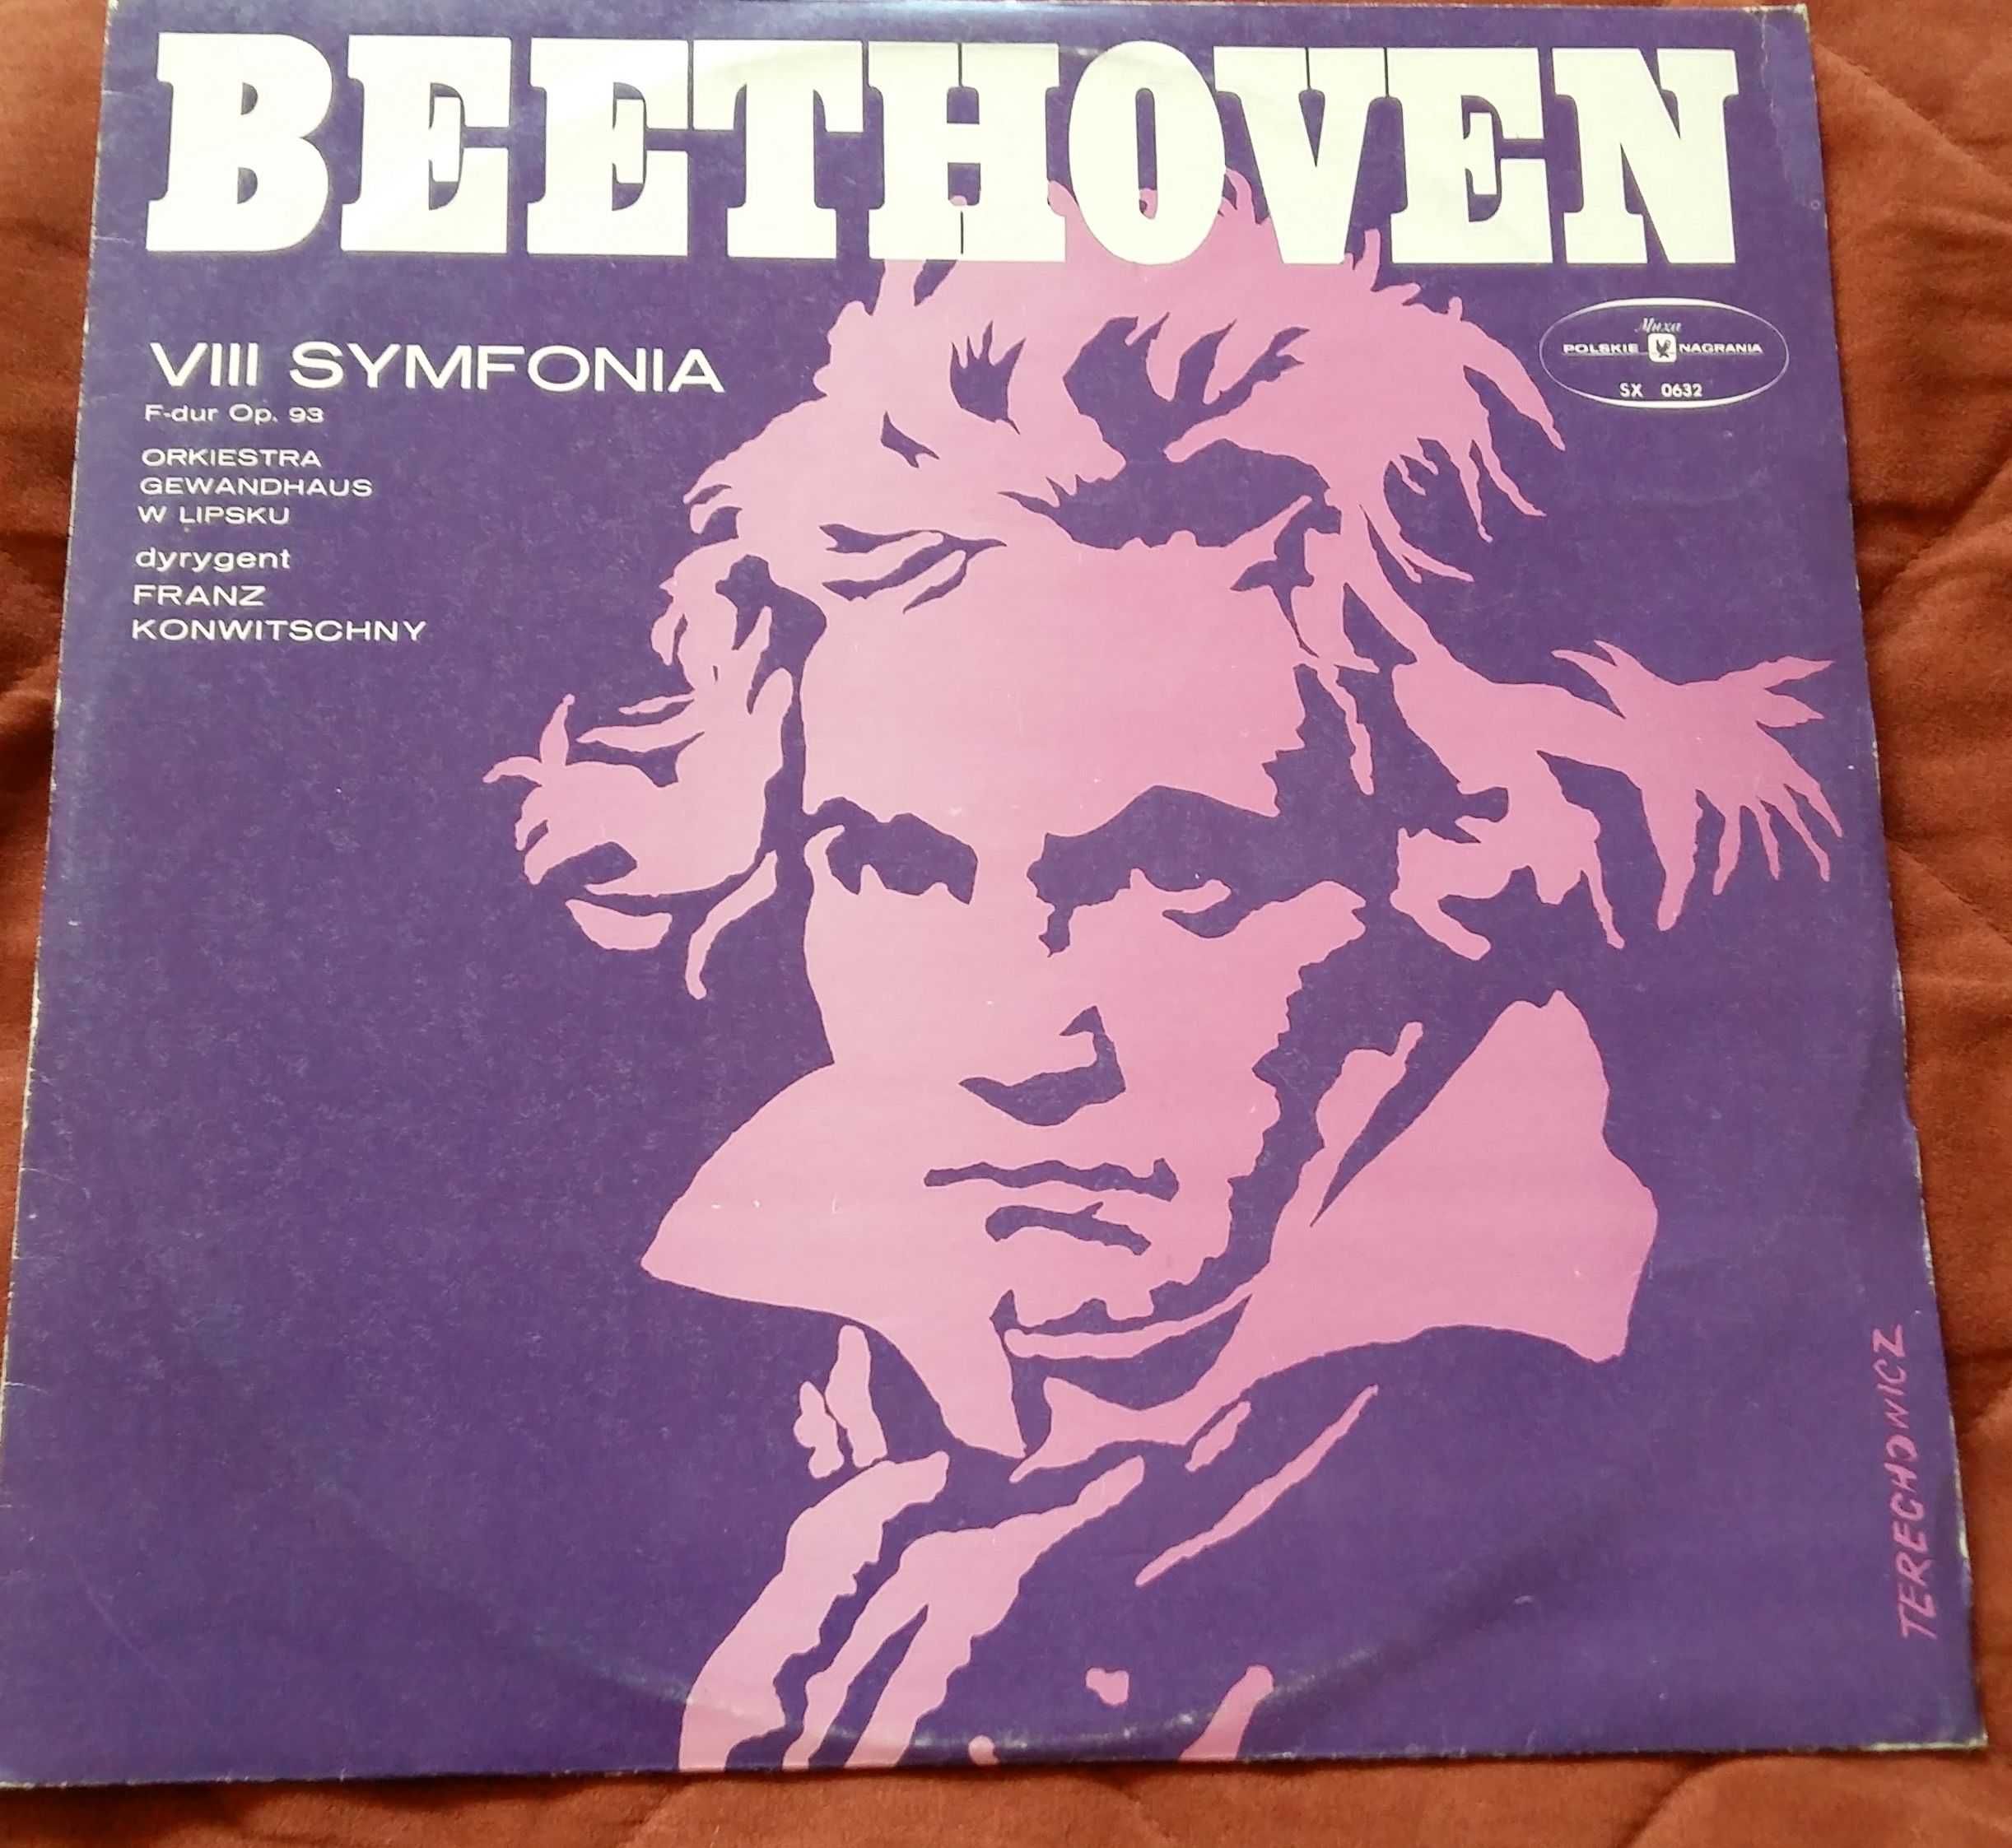 Beethoven -VIII Symfonia - płyta winylowa.Winyl.